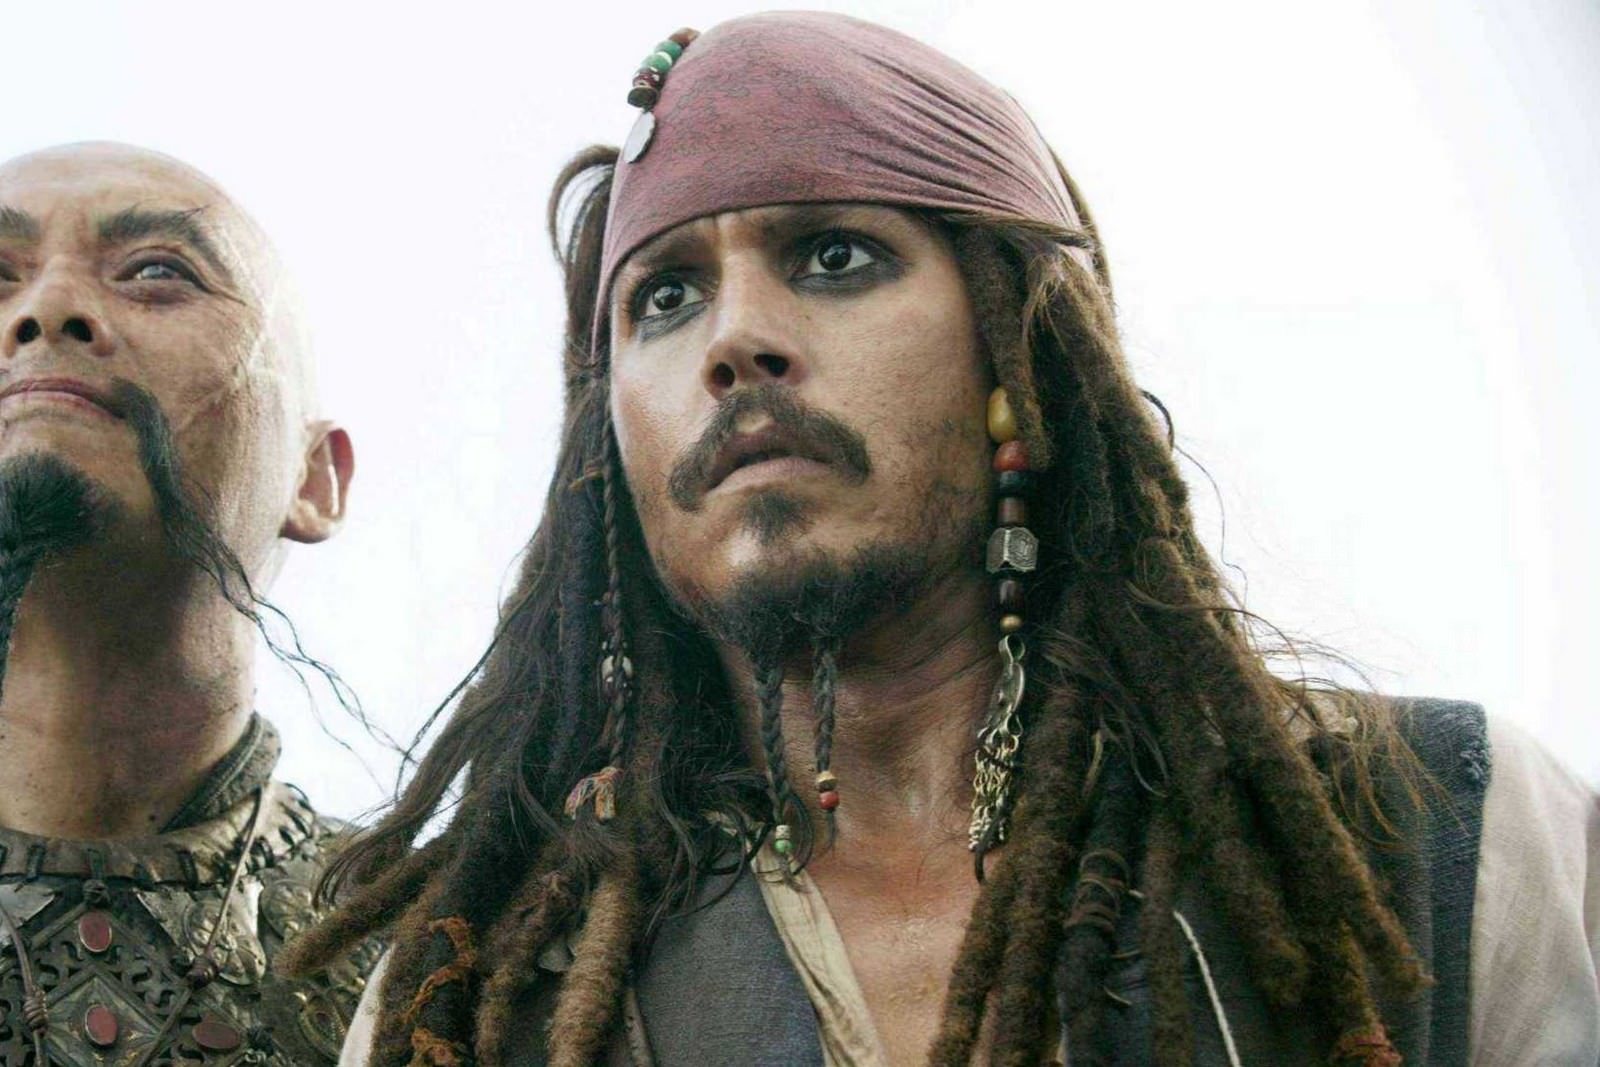 Movie, Pirates of the Caribbean: At World's End(美國, 2007年) / 加勒比海盜 神鬼奇航：世界的盡頭(台灣) / 加勒比海盗3：世界的尽头(中國) / 加勒比海盜：魔盜王終極之戰(香港), 電影角色與演員介紹